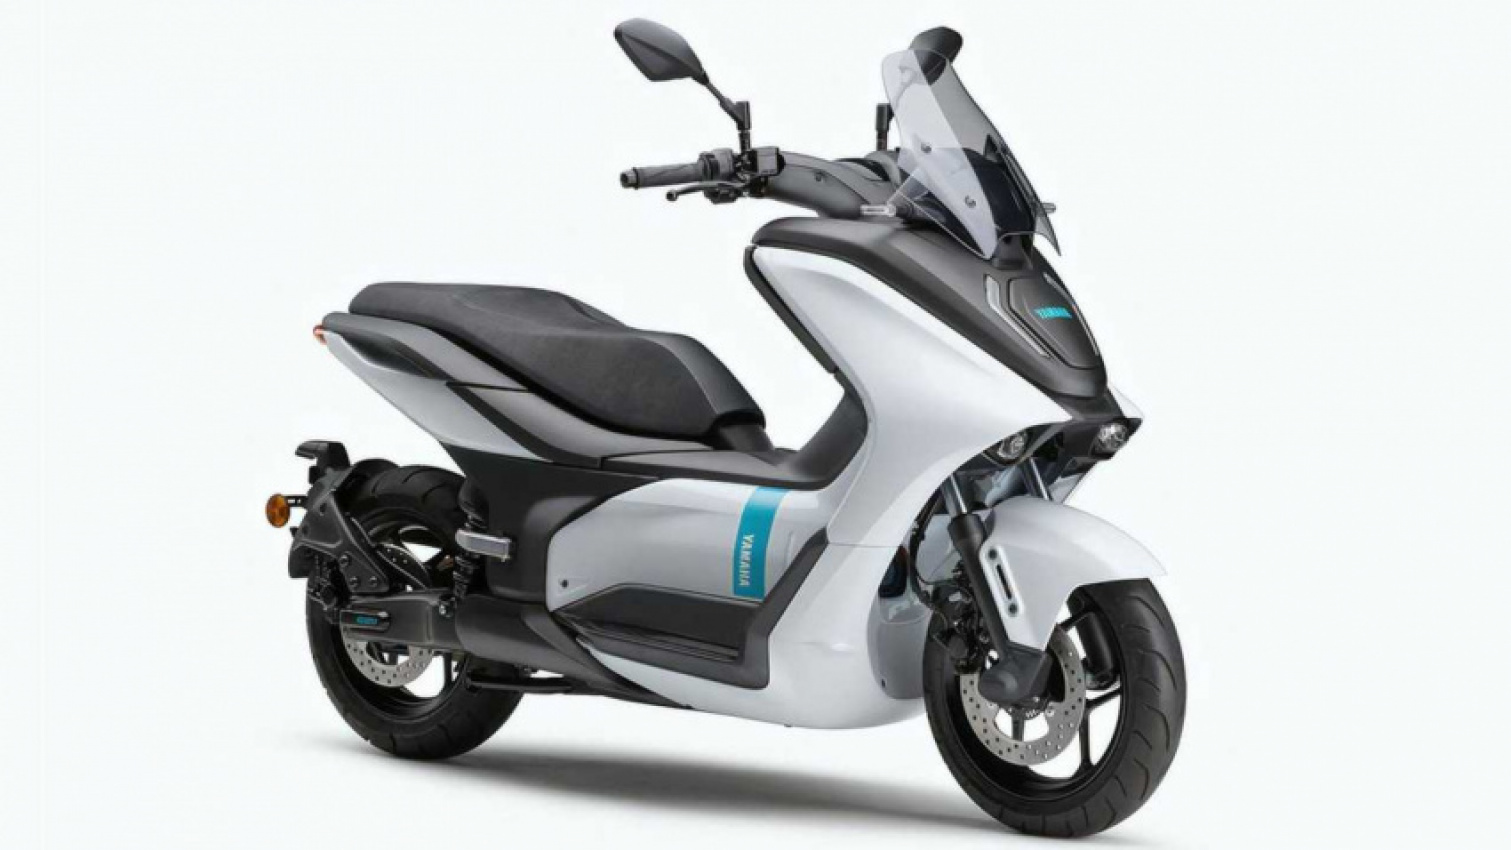 autos, cars, ram, yamaha, yamaha announces e01 electric scooter limited lease program in japan